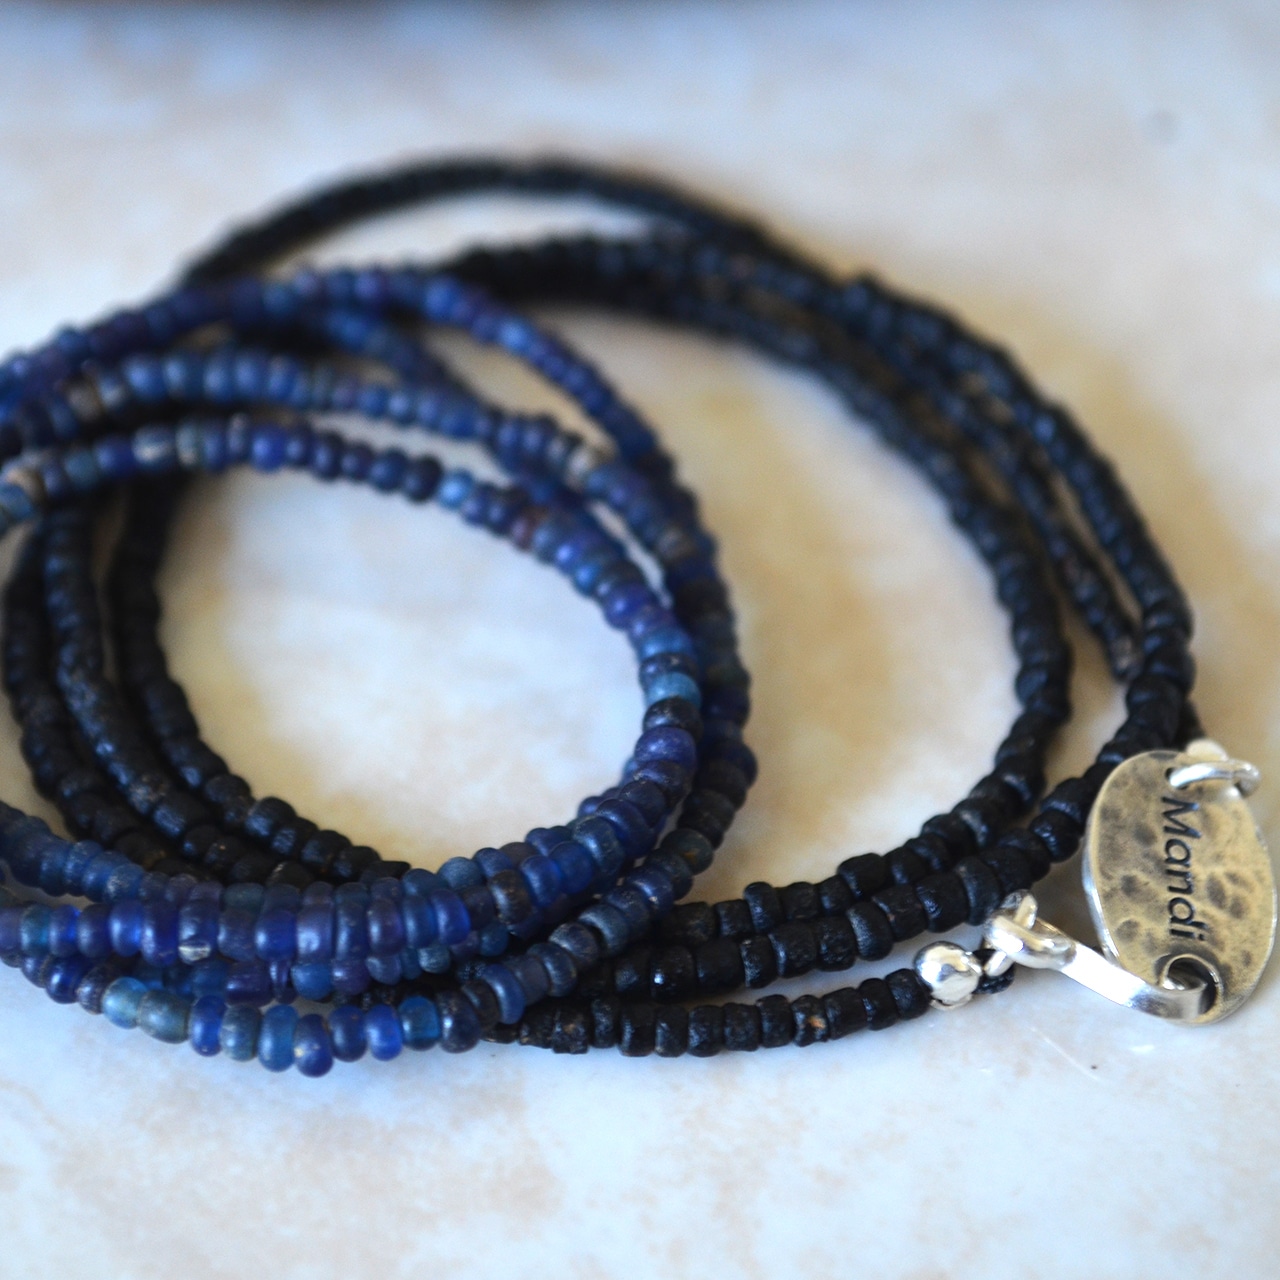 Mandi/マンディ Small A.Beads Necklace(50cm)(Navy/Black)